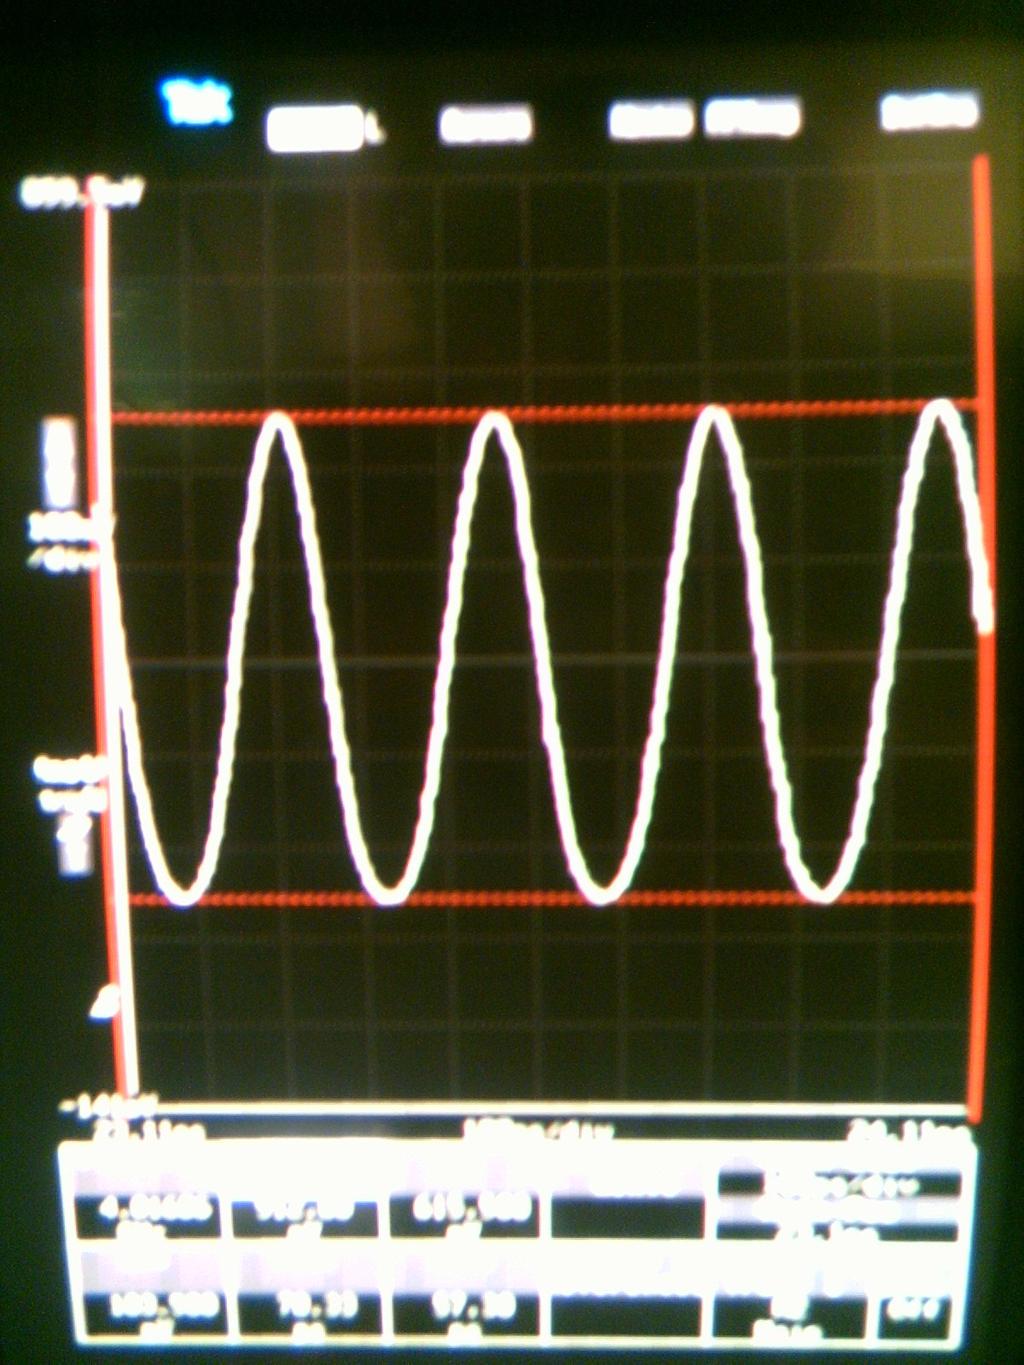 (GHz) Amp. (dbm) Freq. (GHz) Peak- Peak (mv) Rise (ps) Fall (ps) Supply (V) Current (ma) 0.25 8.5 0.25 800 170.6 303.4 1.8 30 0.5 8.5 0.5 744 161.5 243.9 1.8 30 1 8.